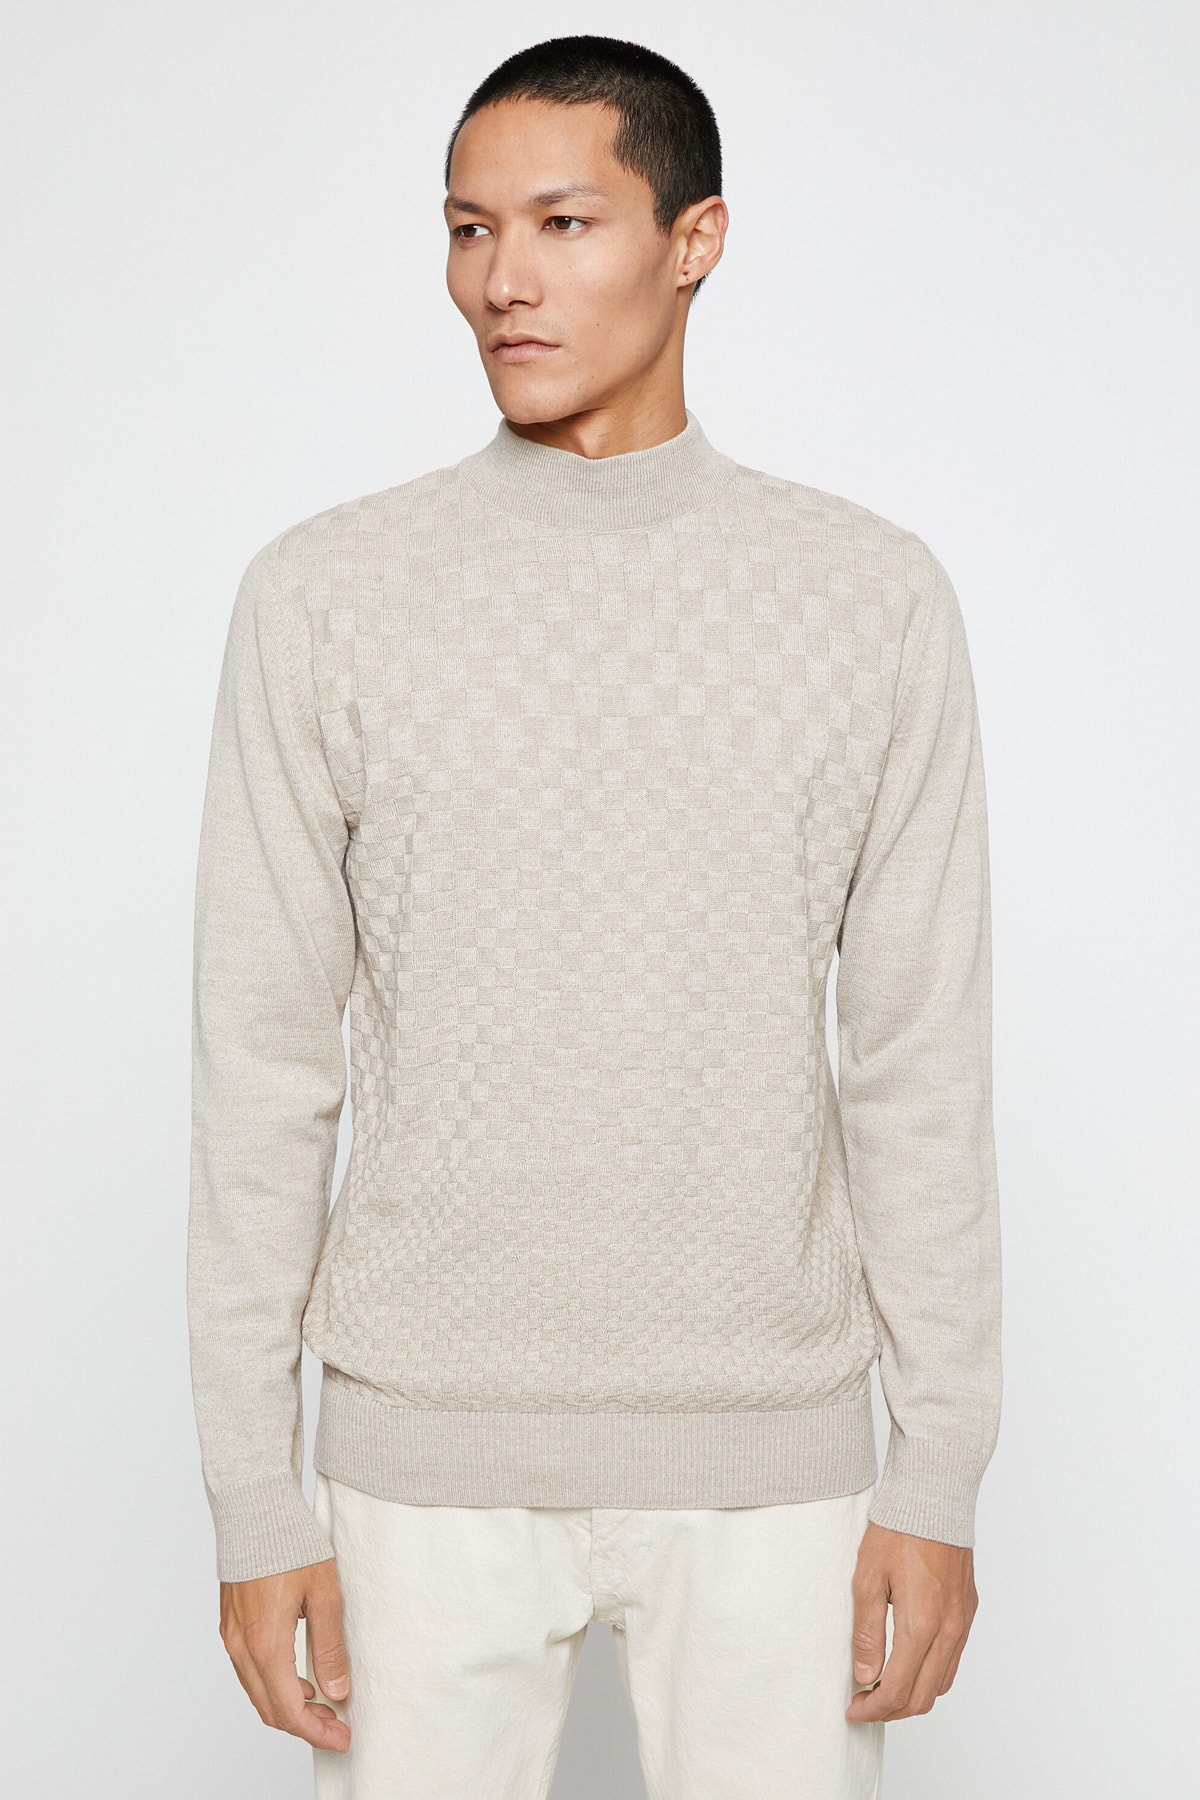 Koton Basic Knitwear Sweater Half Turtleneck Long Sleeve Geometric Patterned